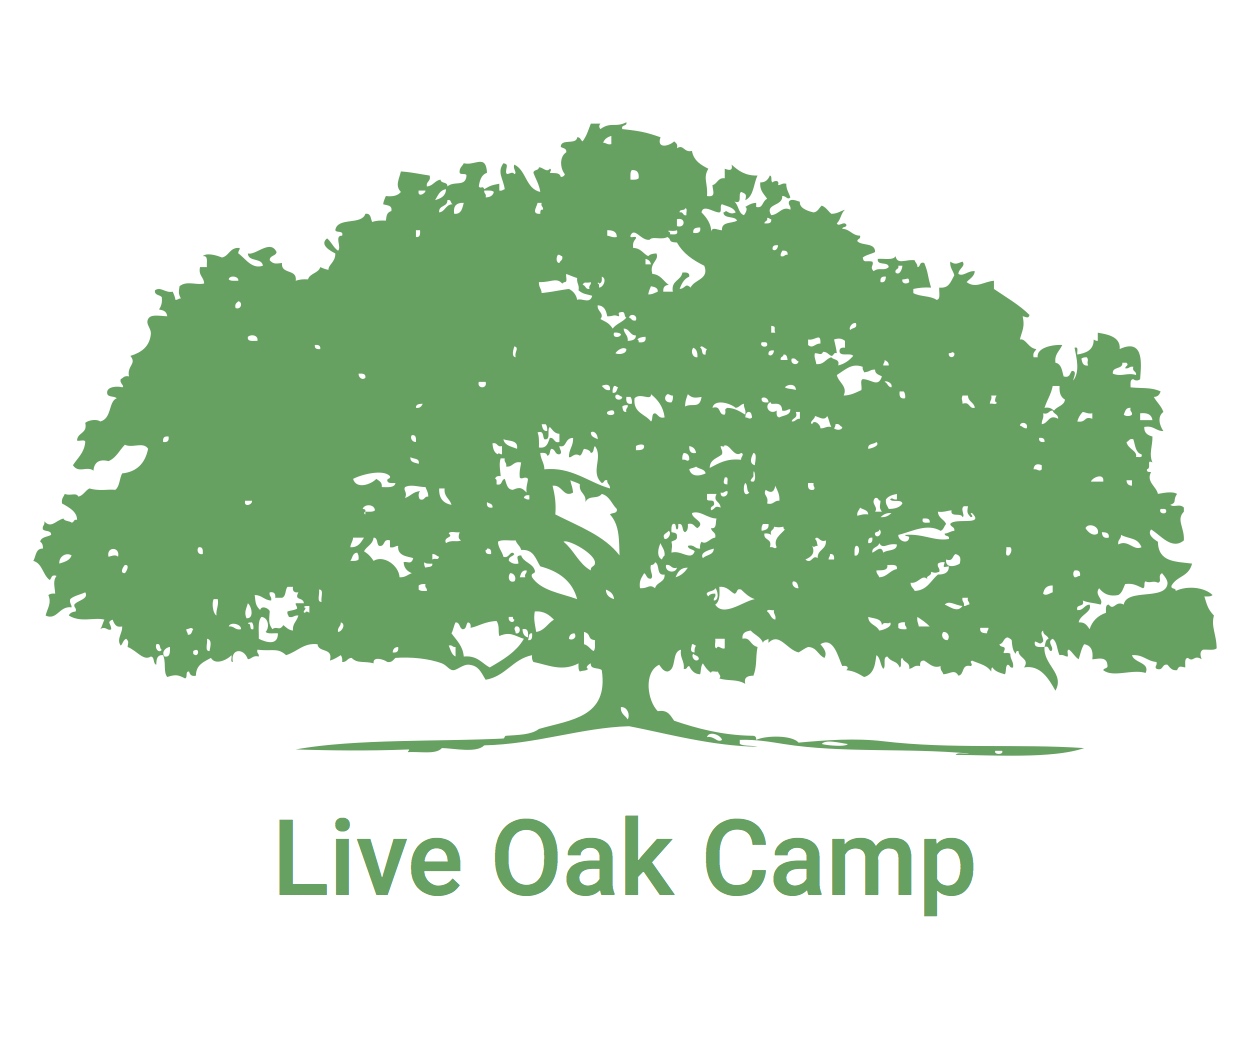 Live Oak Camp